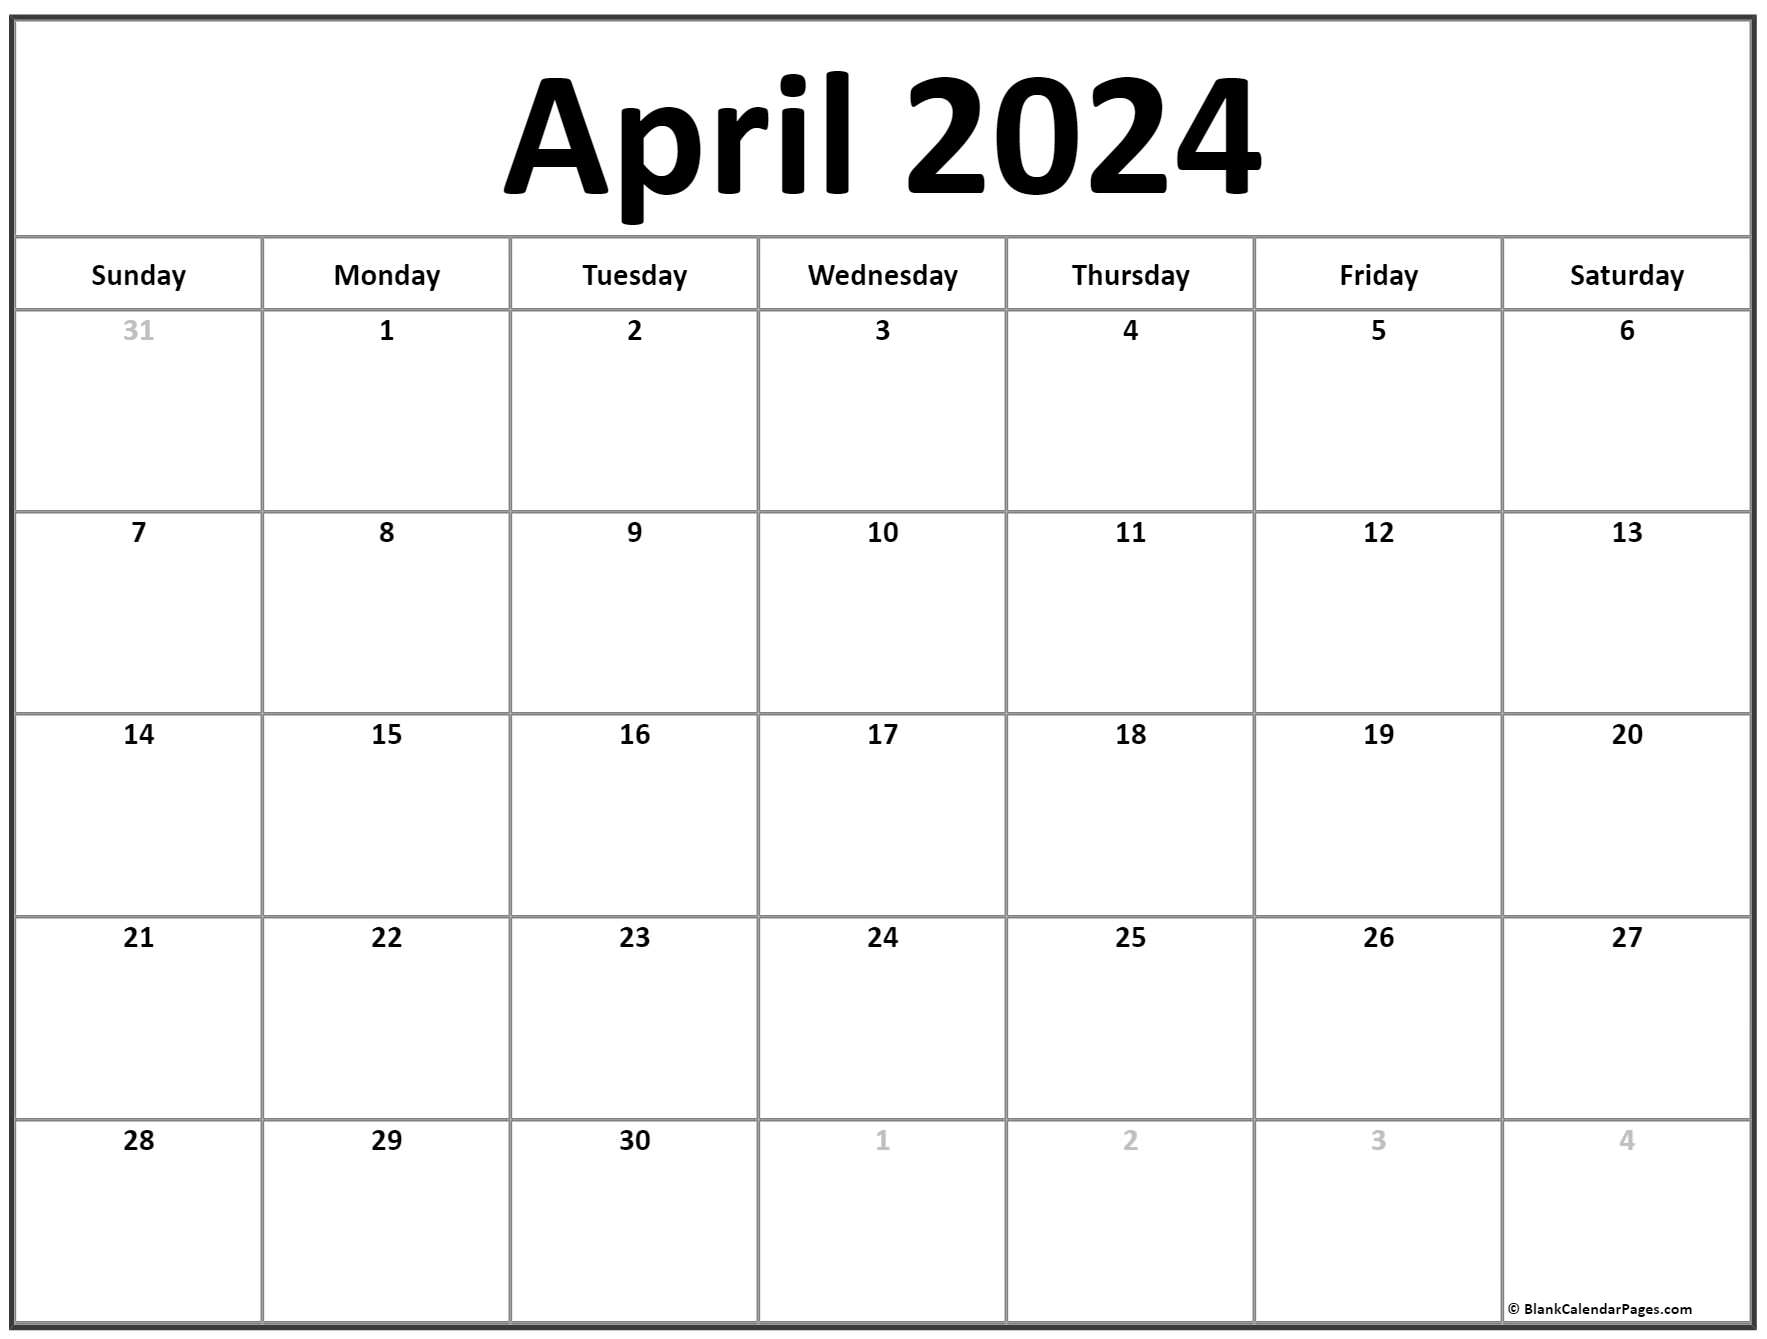 April 2024 Calendar B17 